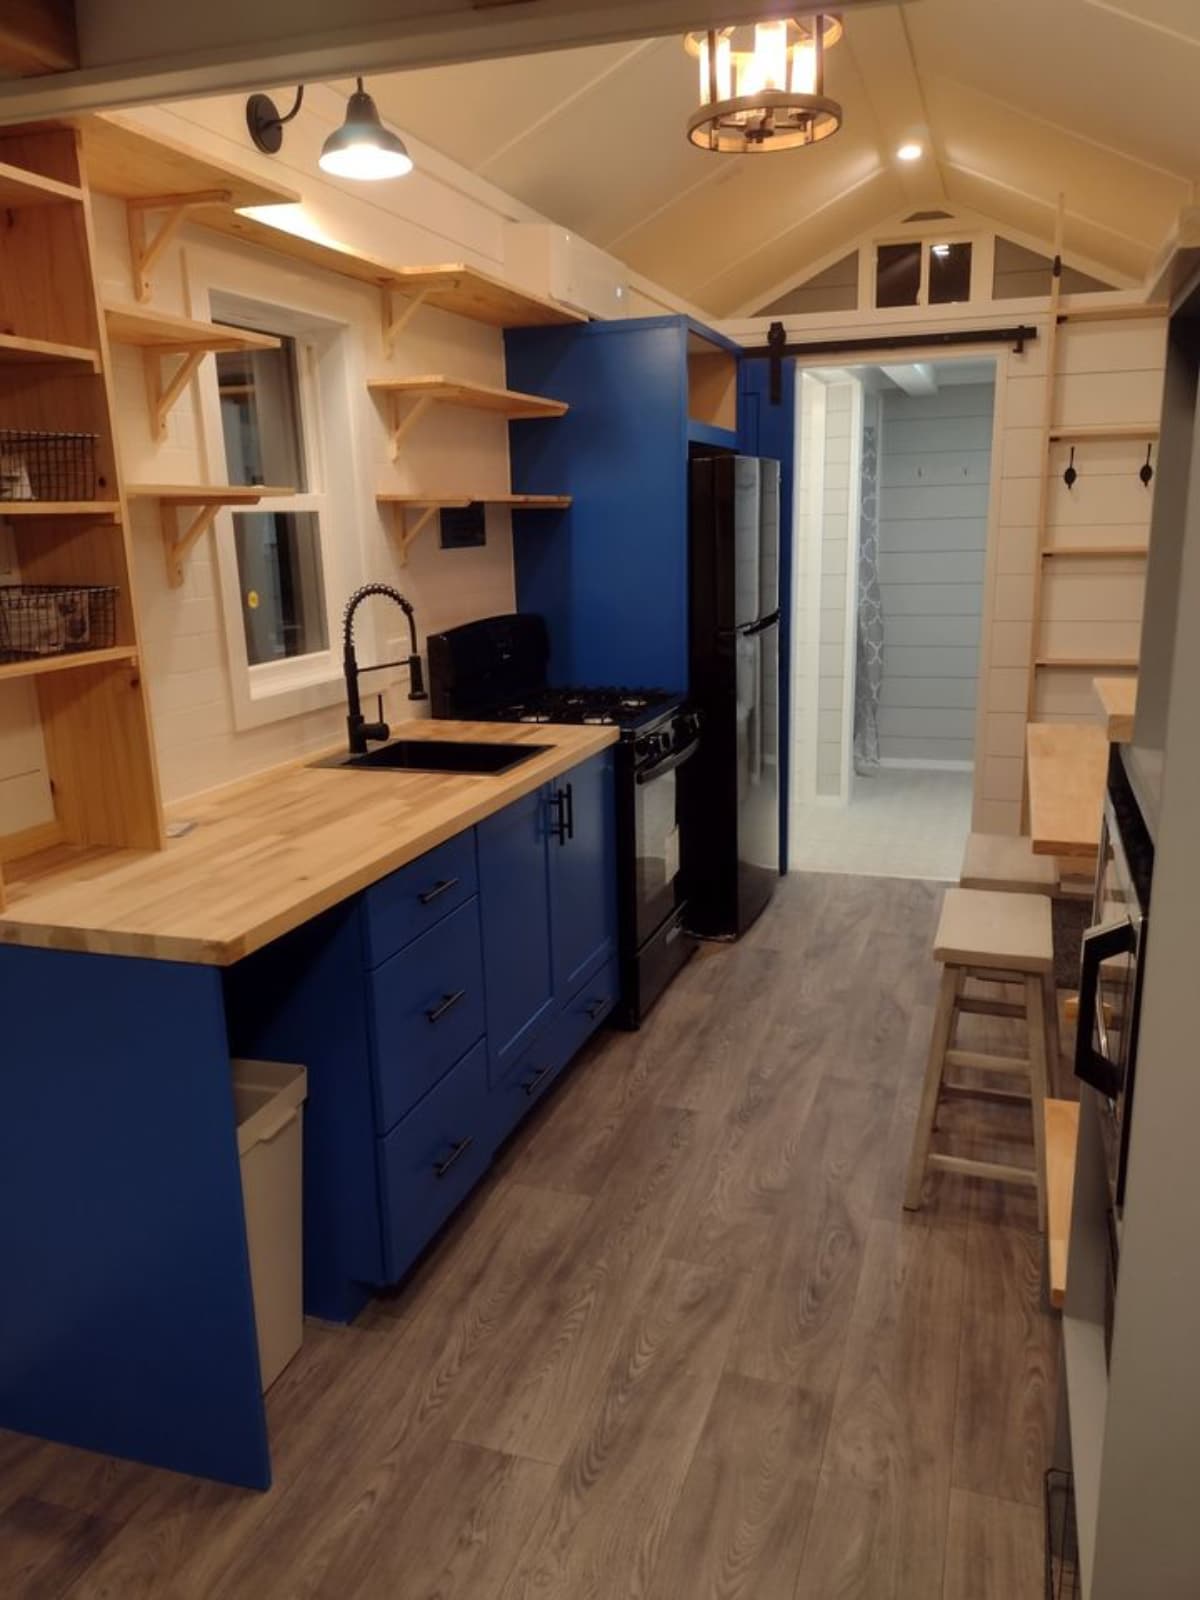 Kitchen area of 27' Tiny Home on Wheel